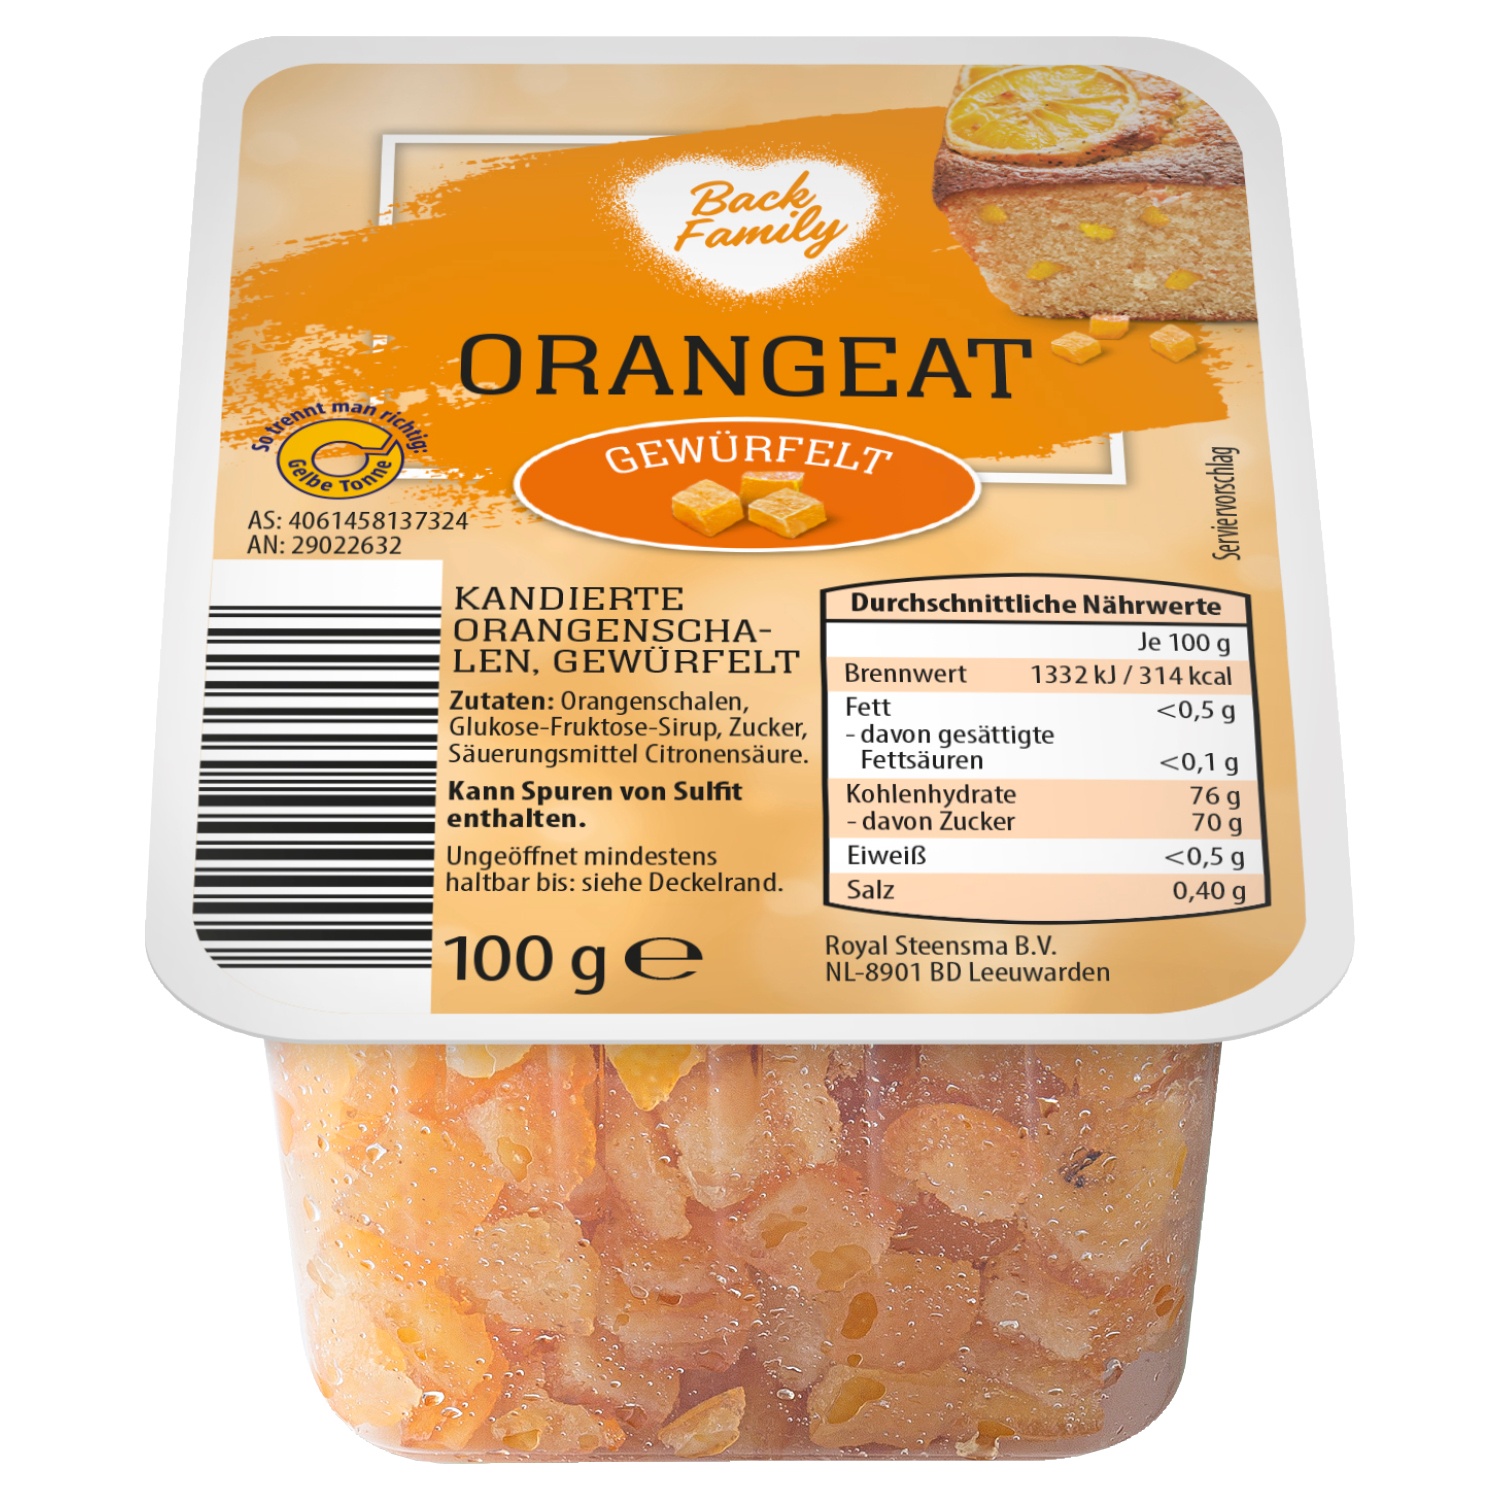 Back Family Zitronat/Orangeat 100 g